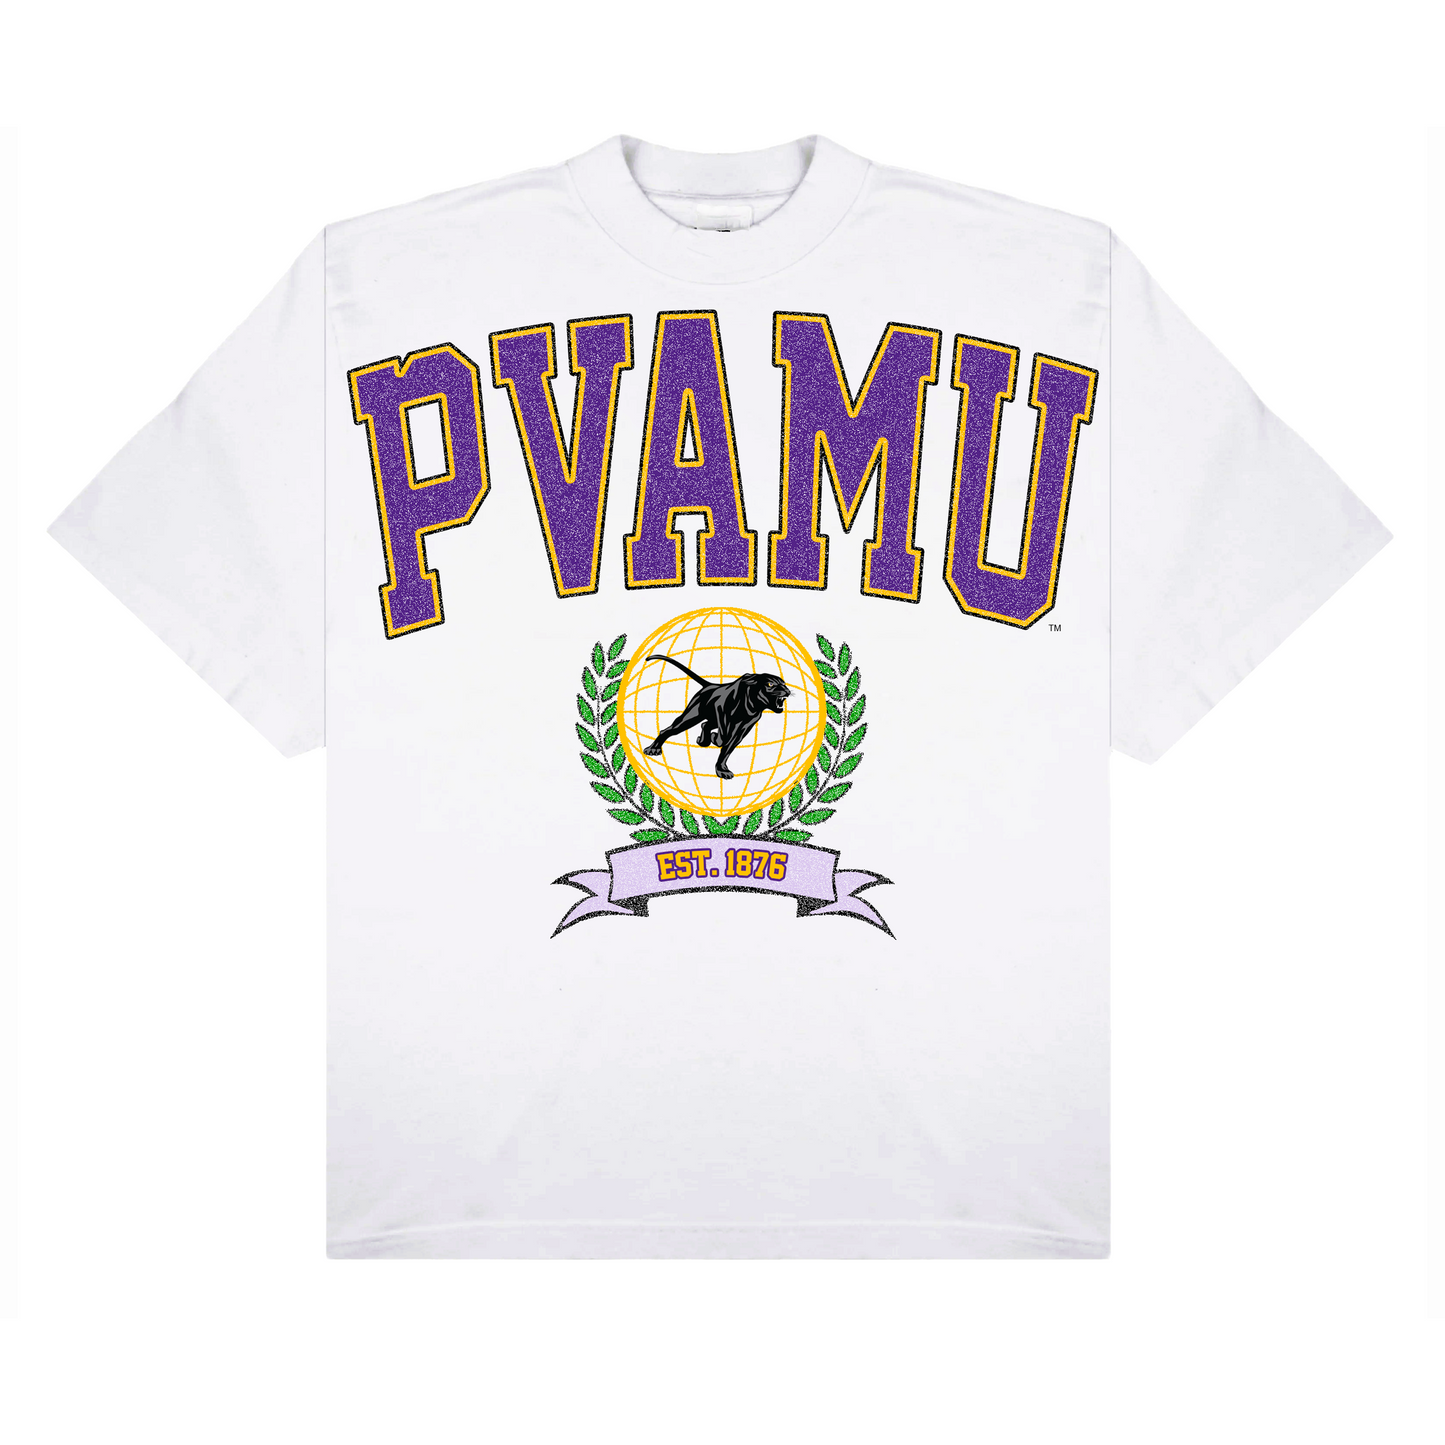 Prairie View A&M University PVAMU T-shirt - PVAMU Apparel and Clothing - 1921 Movement  1921 movement